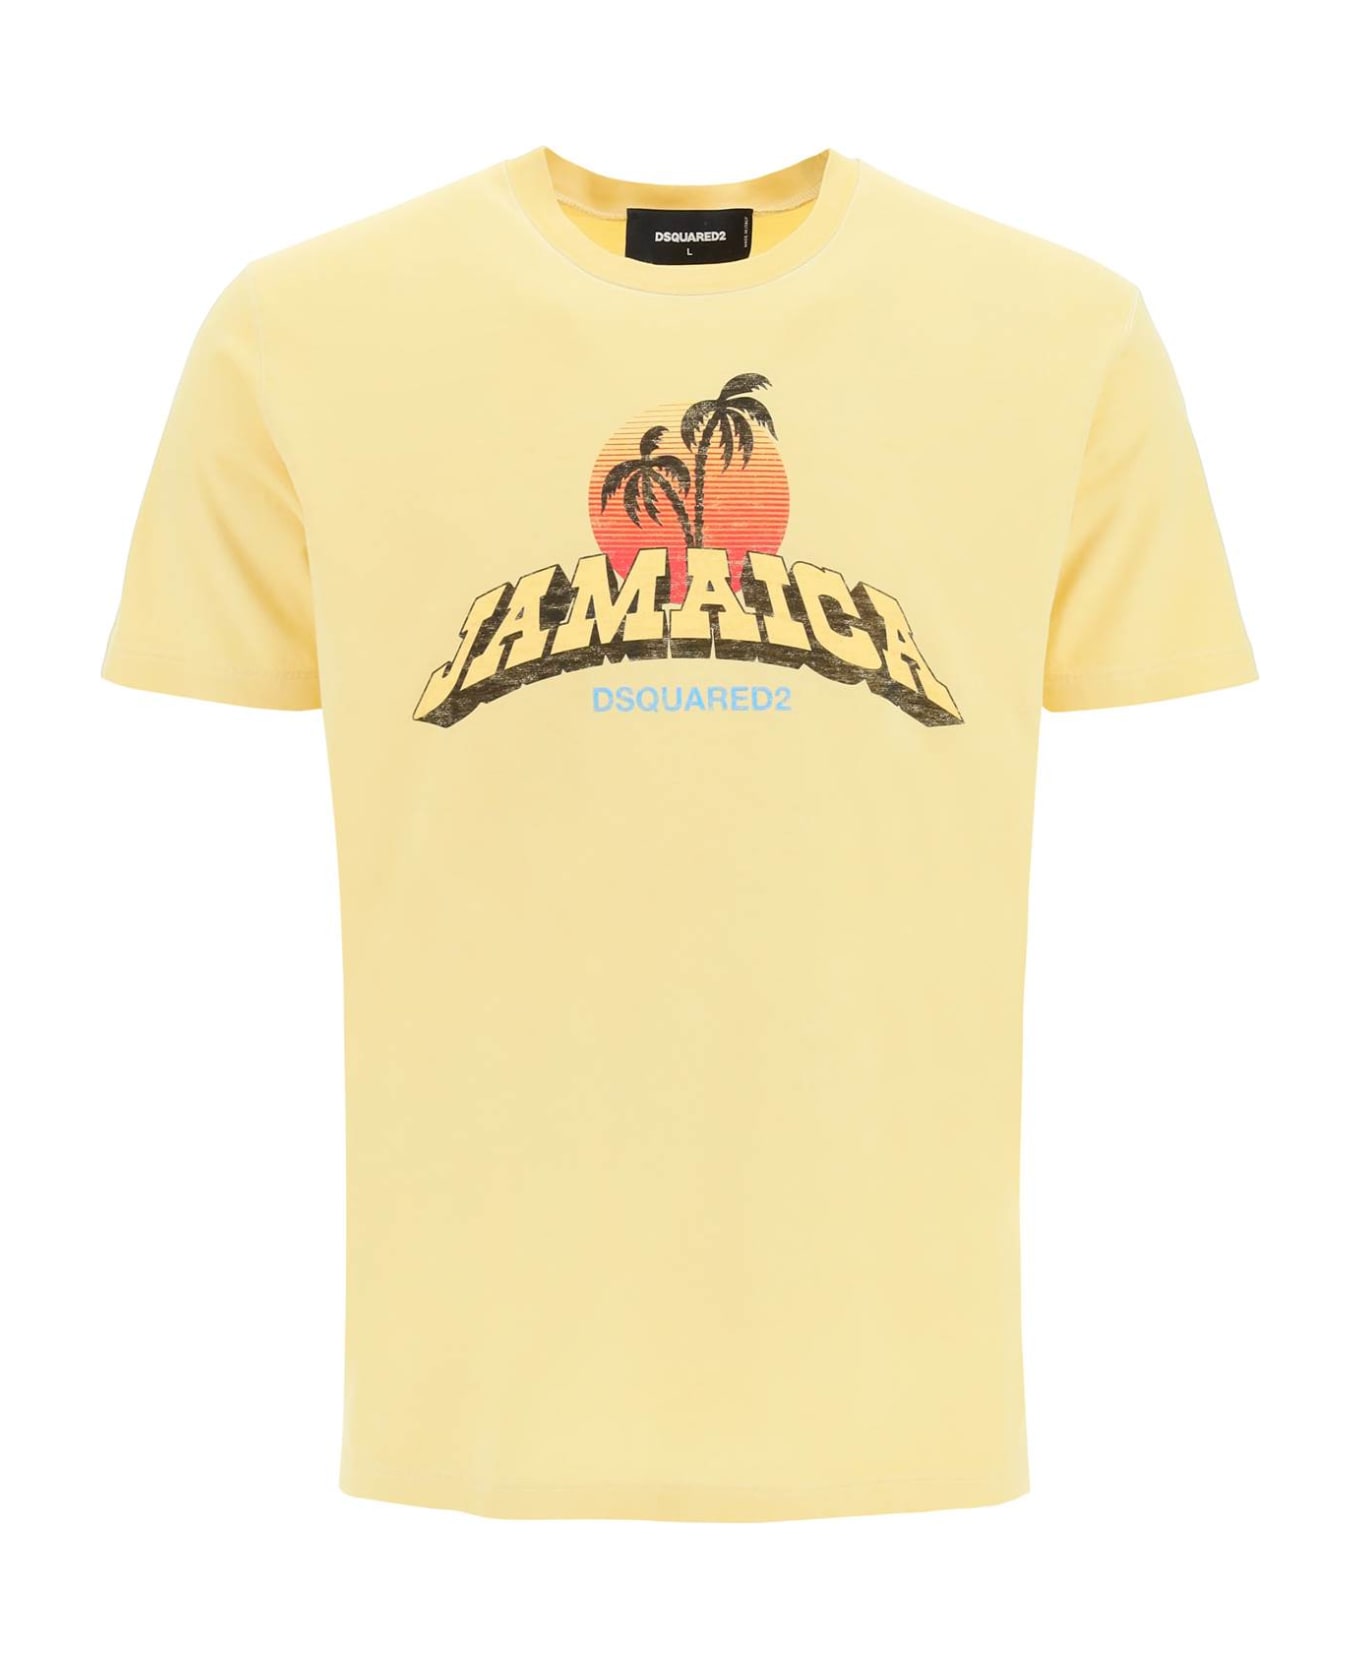 Dsquared2 Jamaica T-shirt - APRICOT TAN (Yellow) シャツ